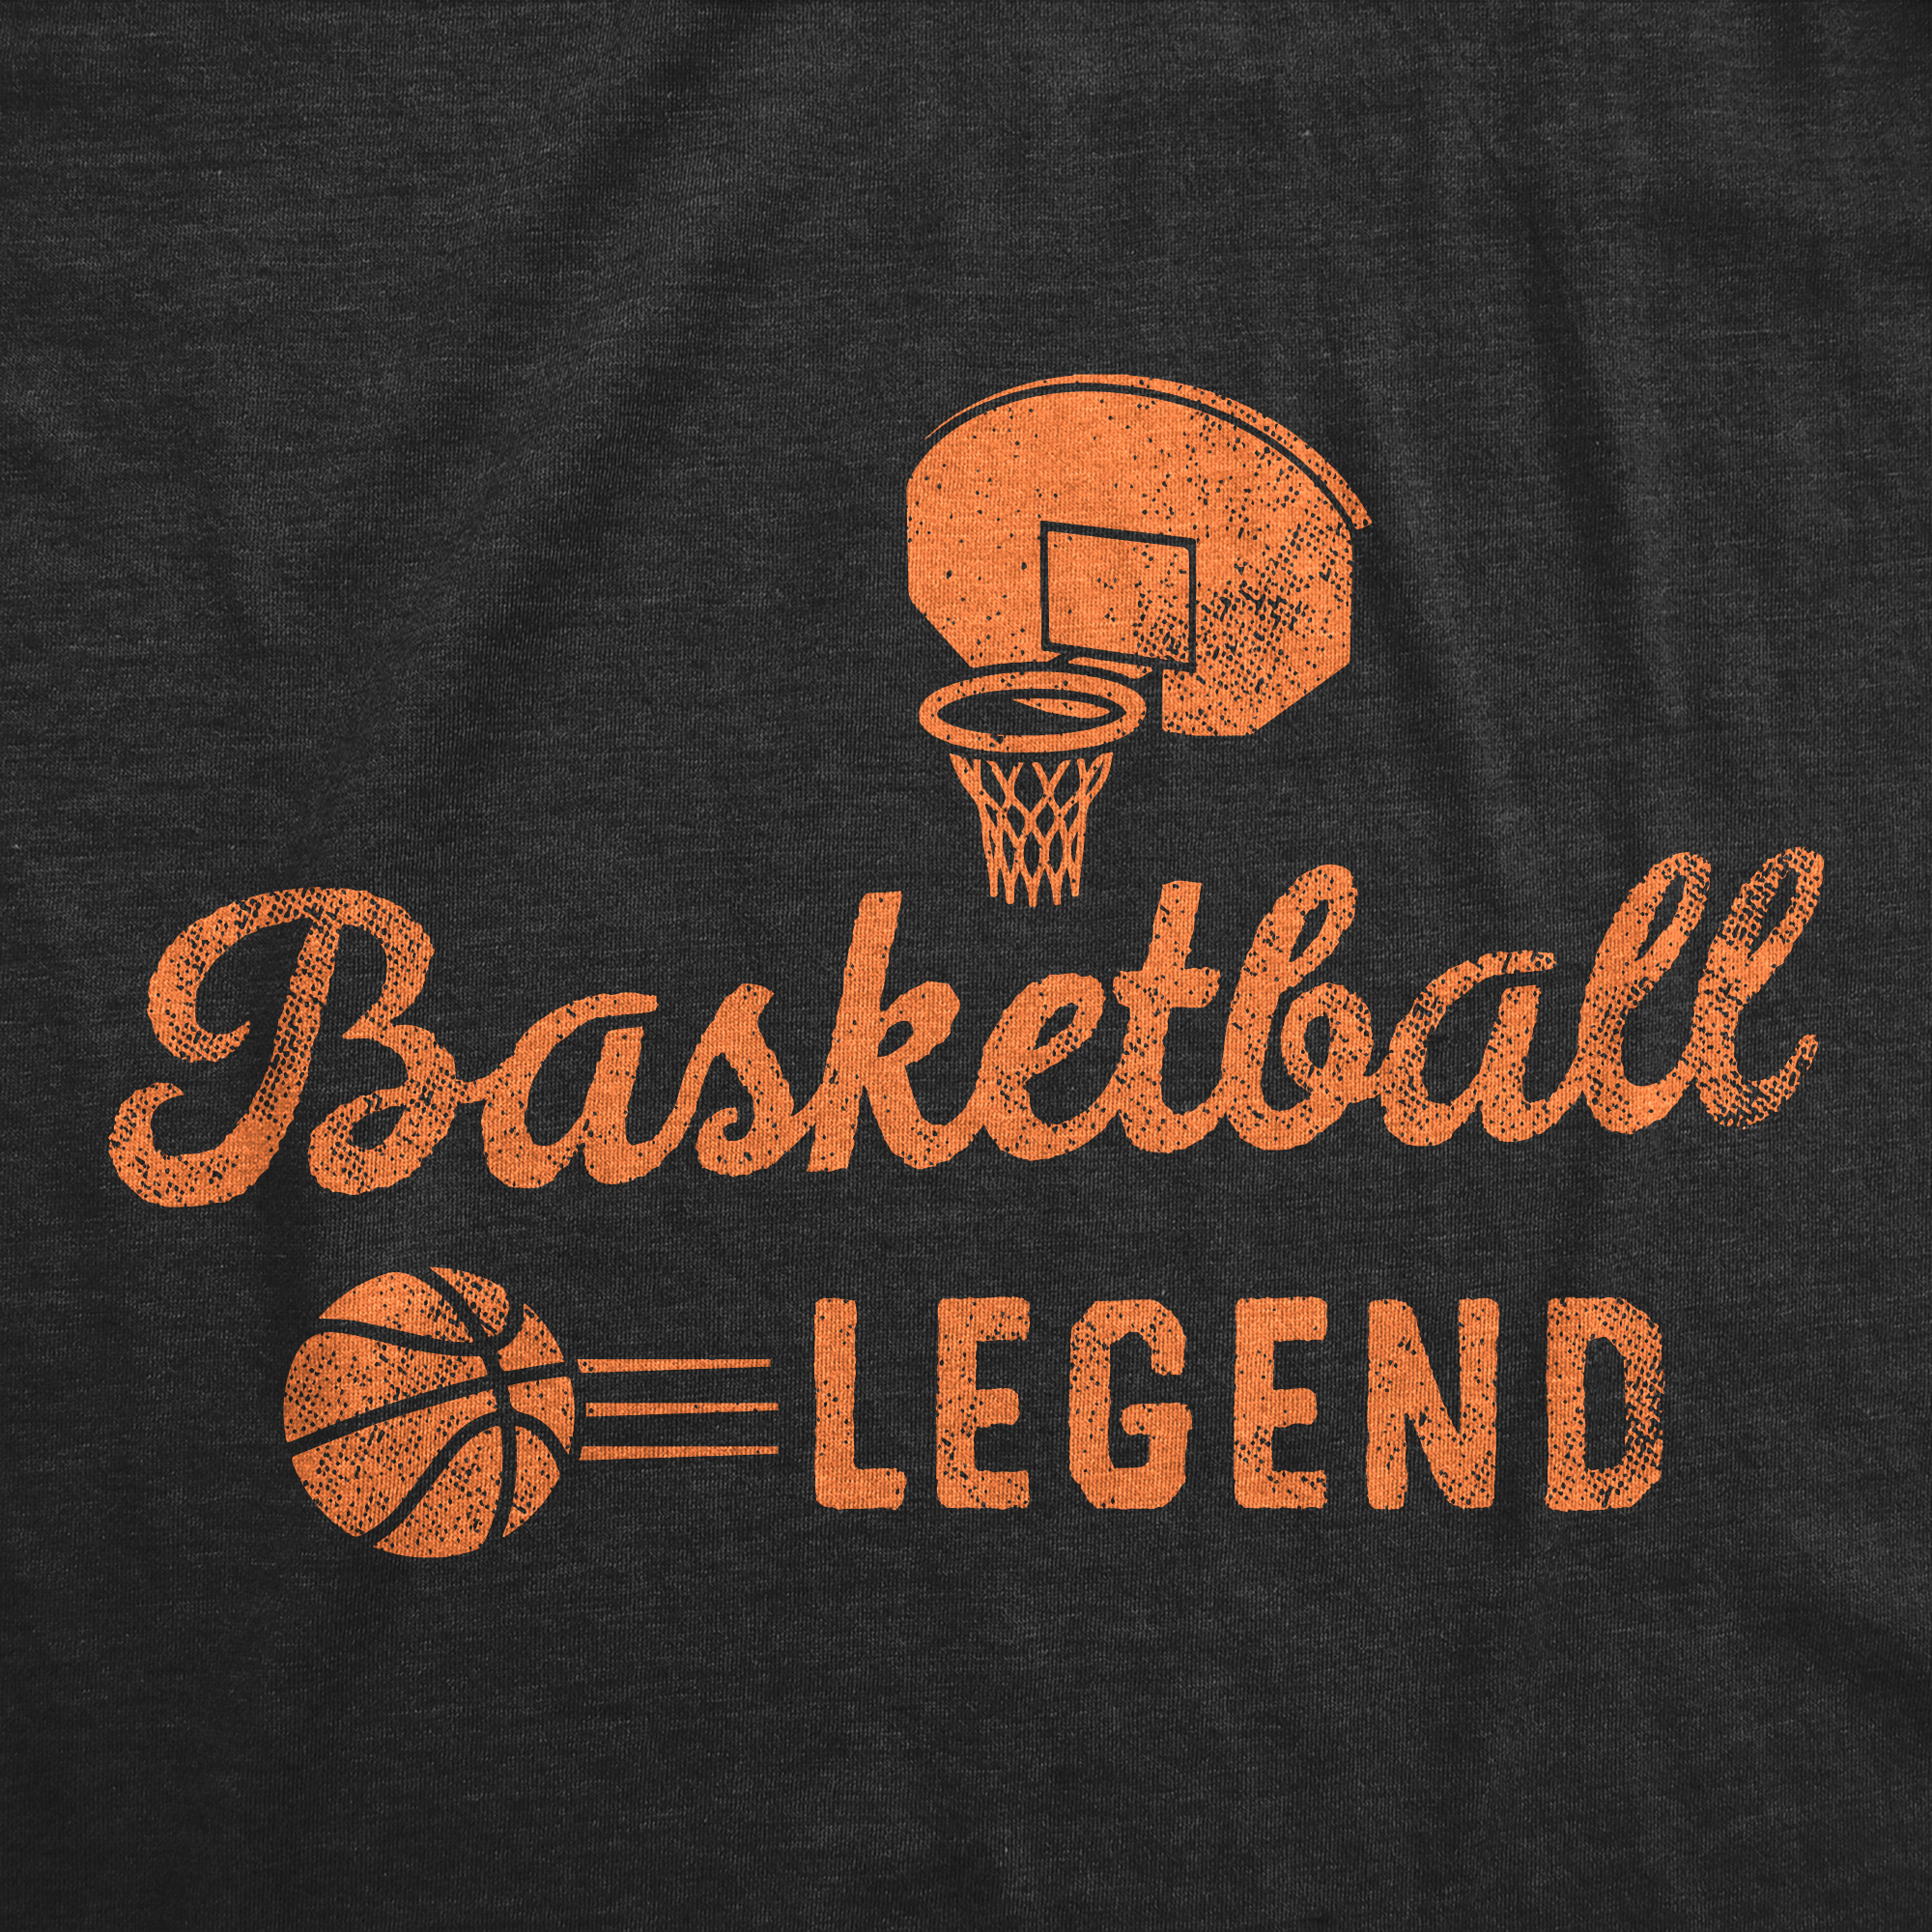 Funny Heather Black - Basketball Lengend Basketball Legend Mens T Shirt Nerdy Basketball Tee